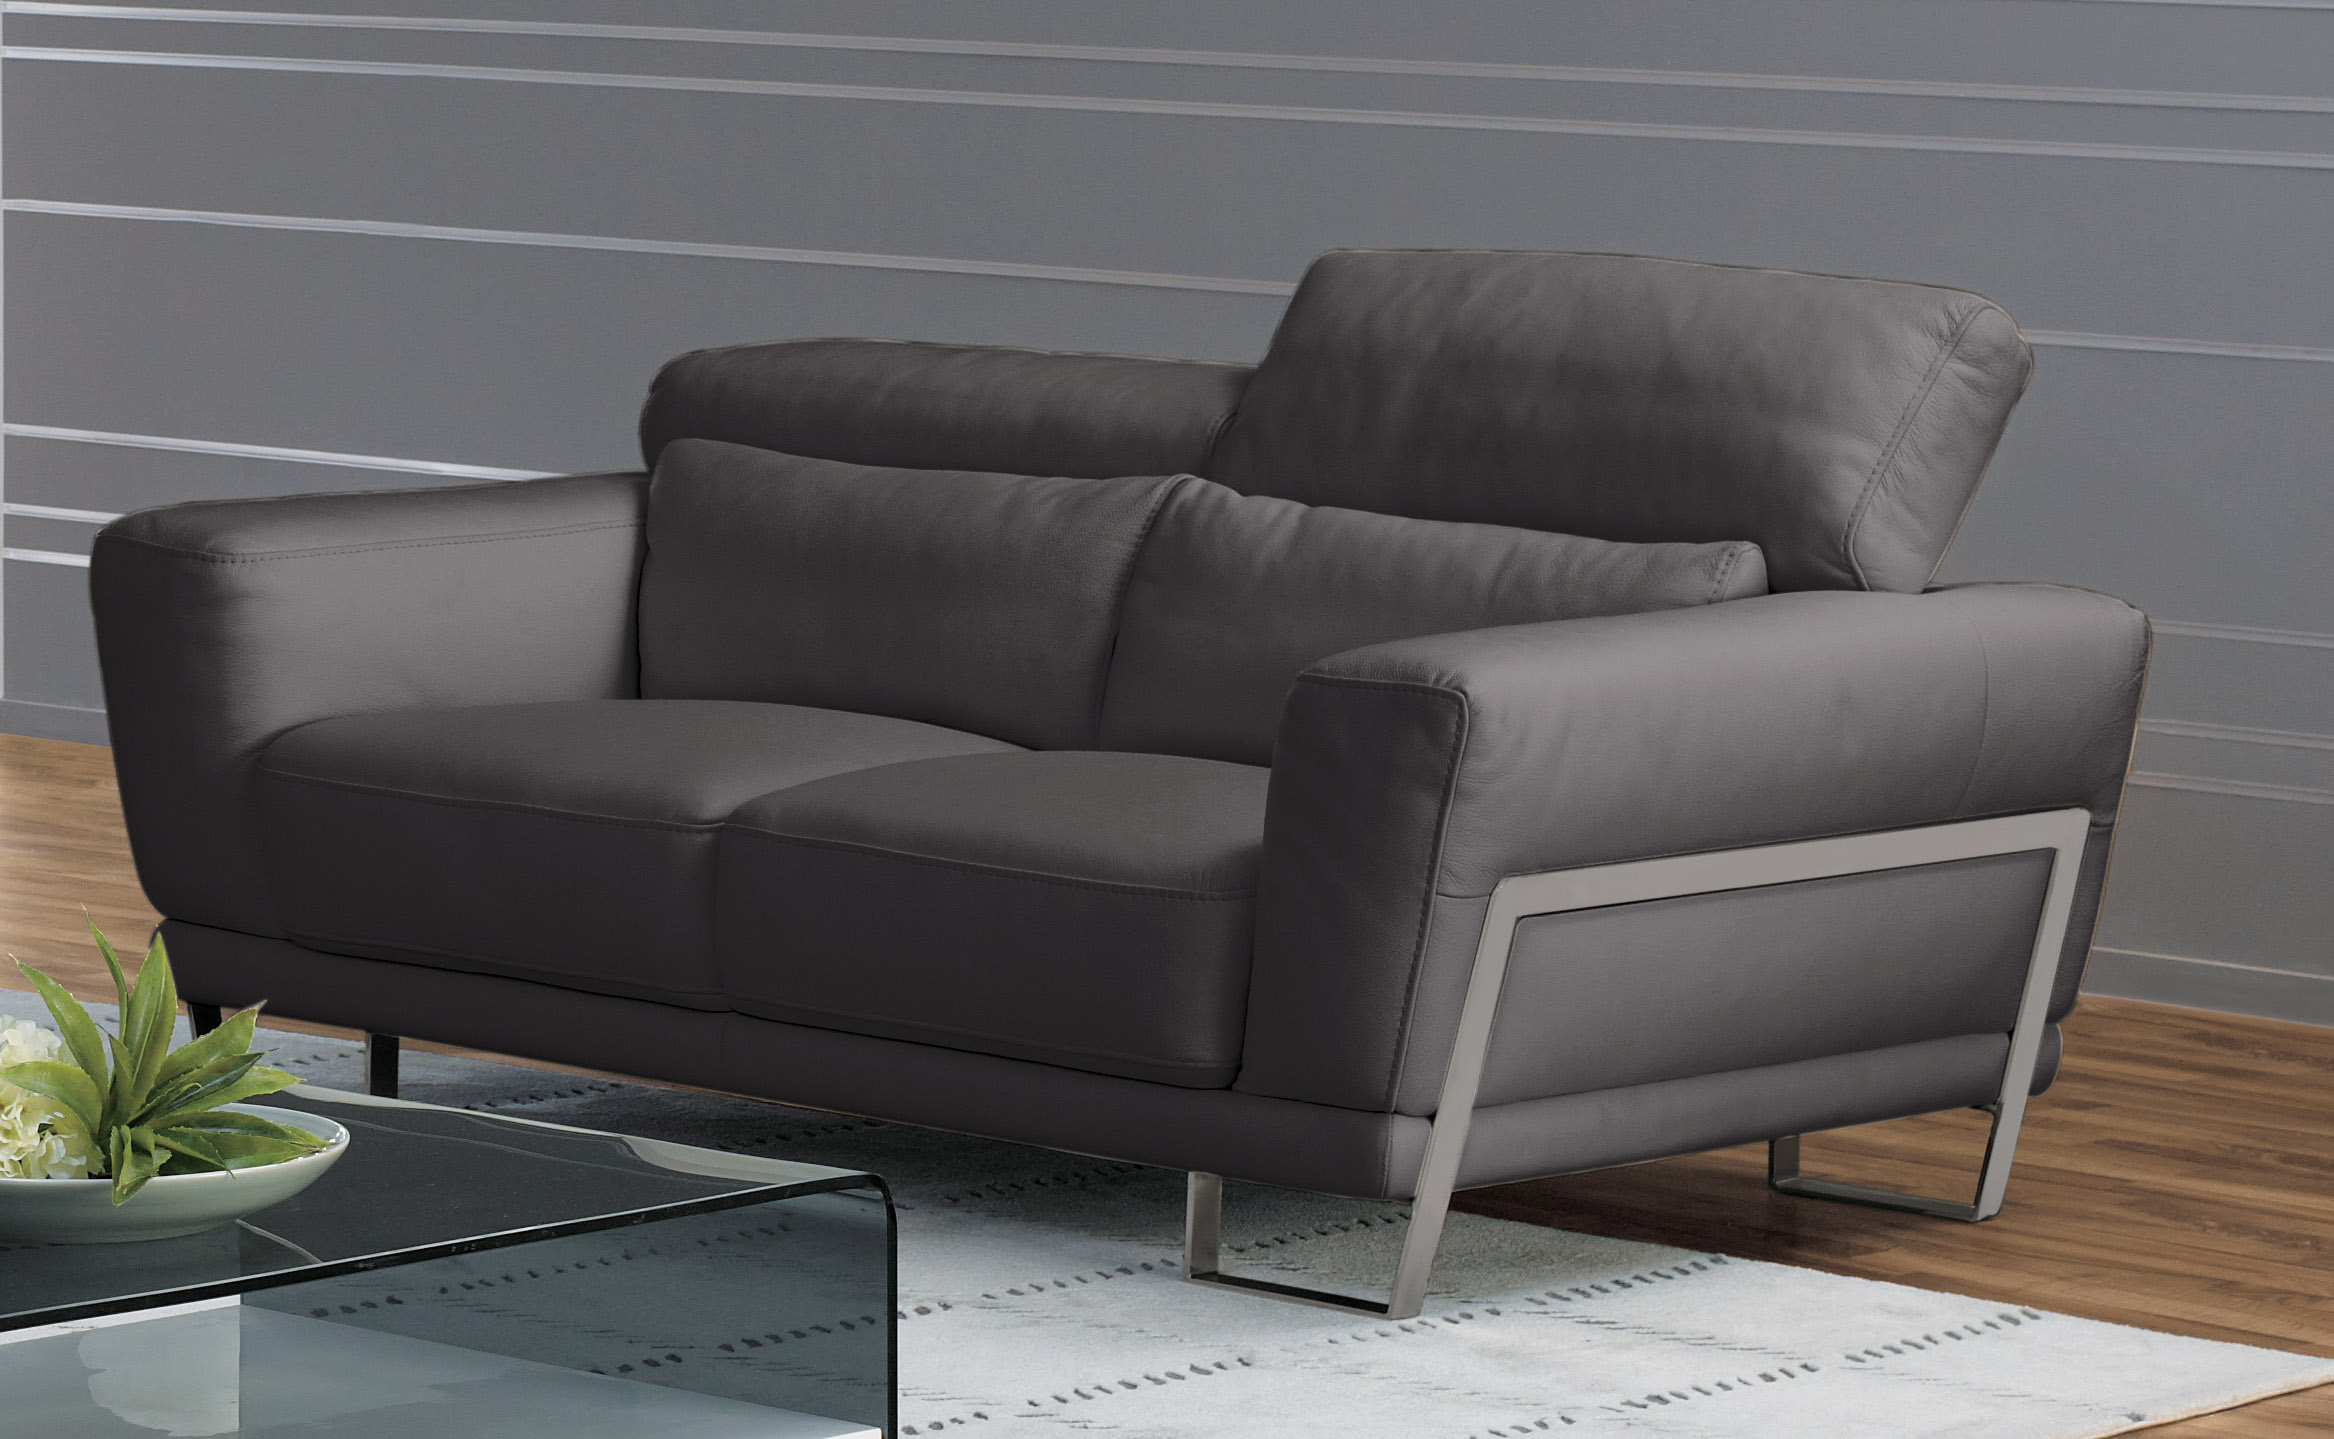 3 PC Classic Italian Leather Living Room Set - Click Image to Close